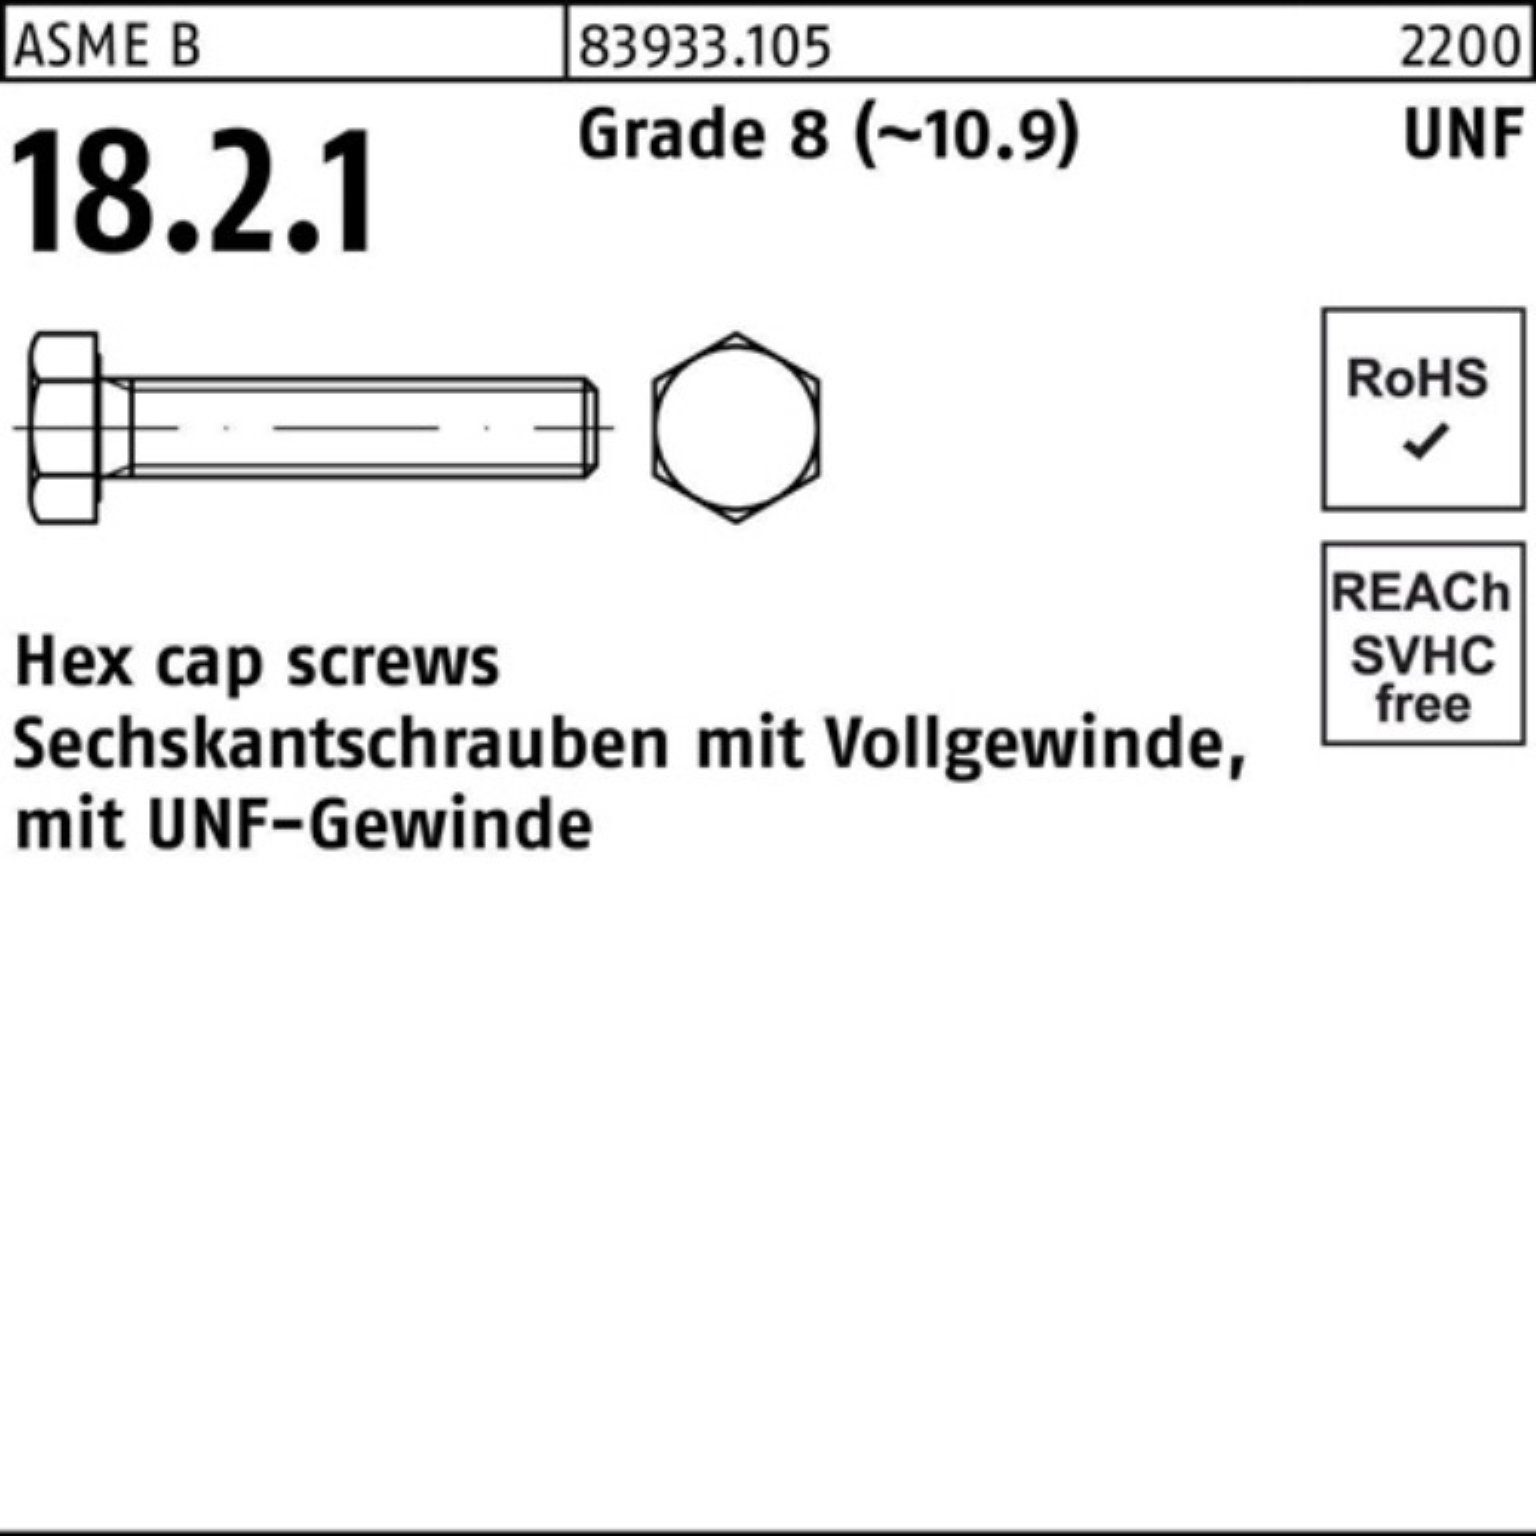 Reyher Sechskantschraube 100er Pack Sechskantschraube R 83933 UNF-Gewinde VG 3/8x 3/4 Grade 8